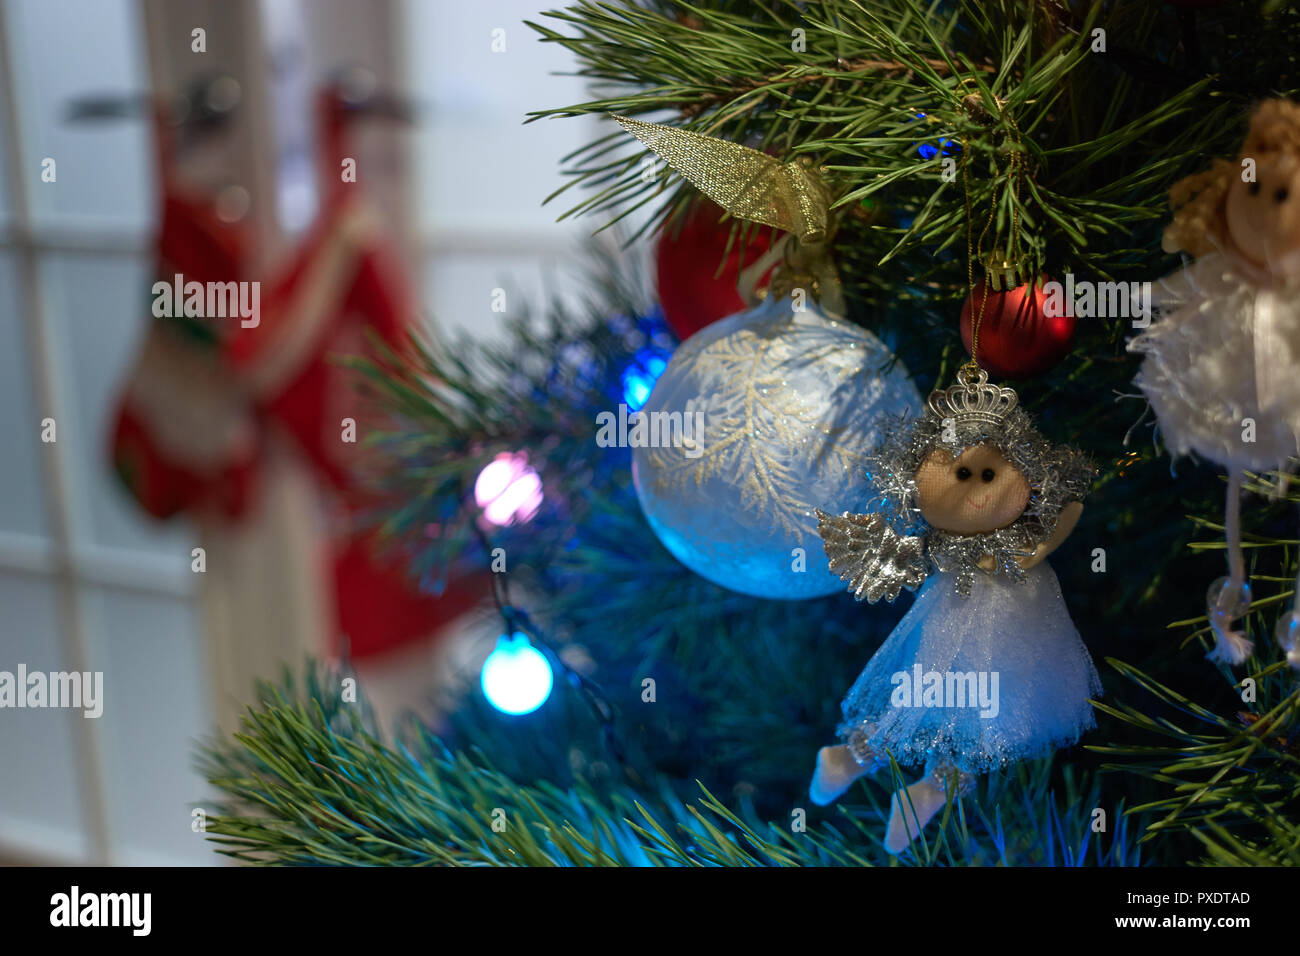 Christmas tree decor with angel figurine. Stock Photo